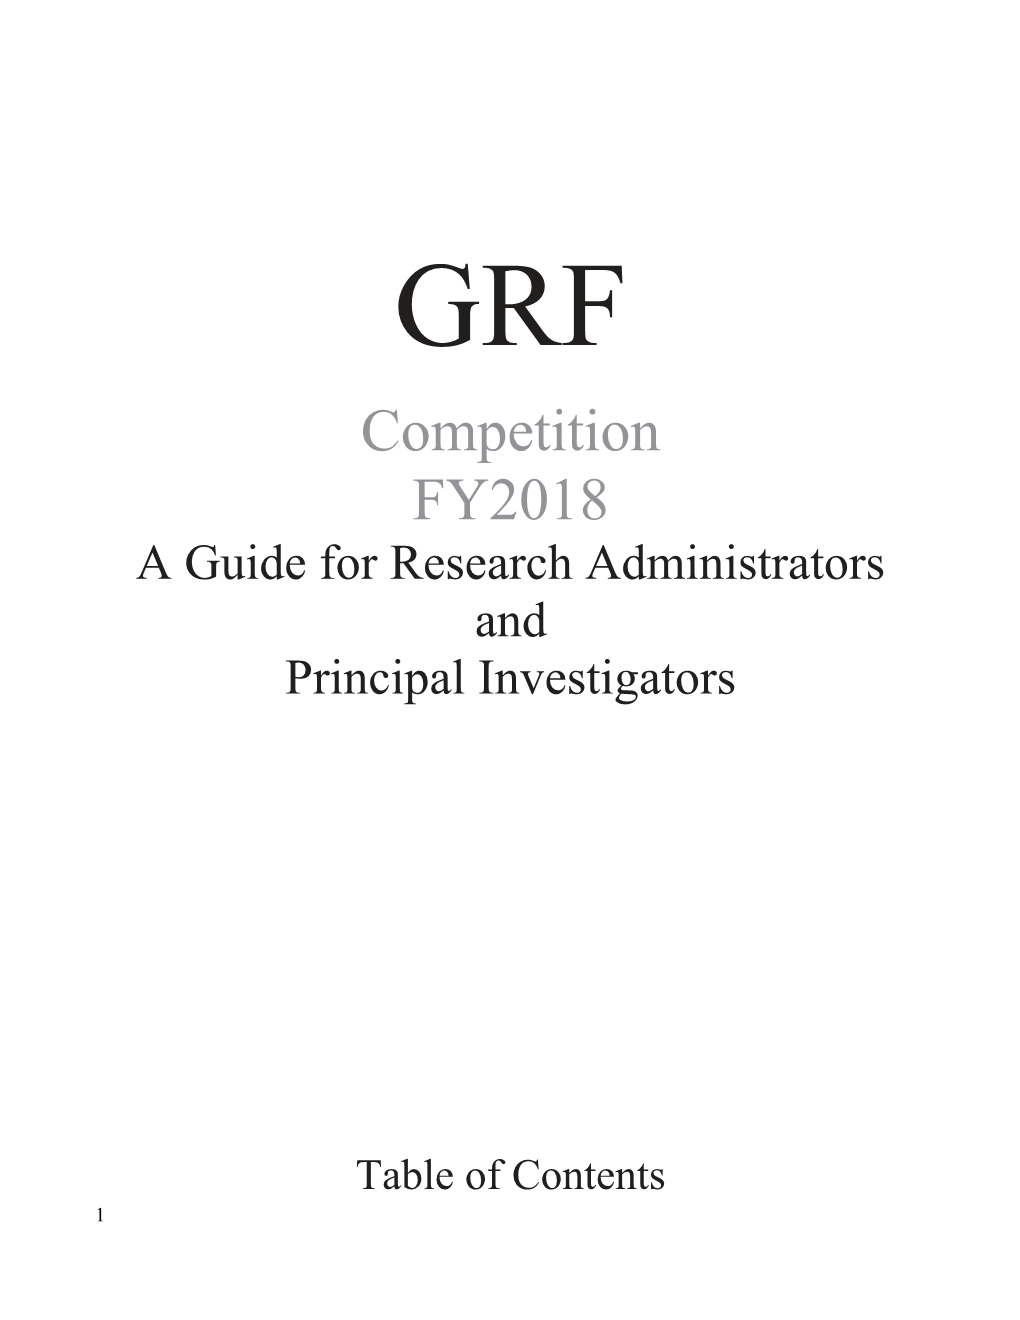 A Guide for Research Administrators and Principal Investigators